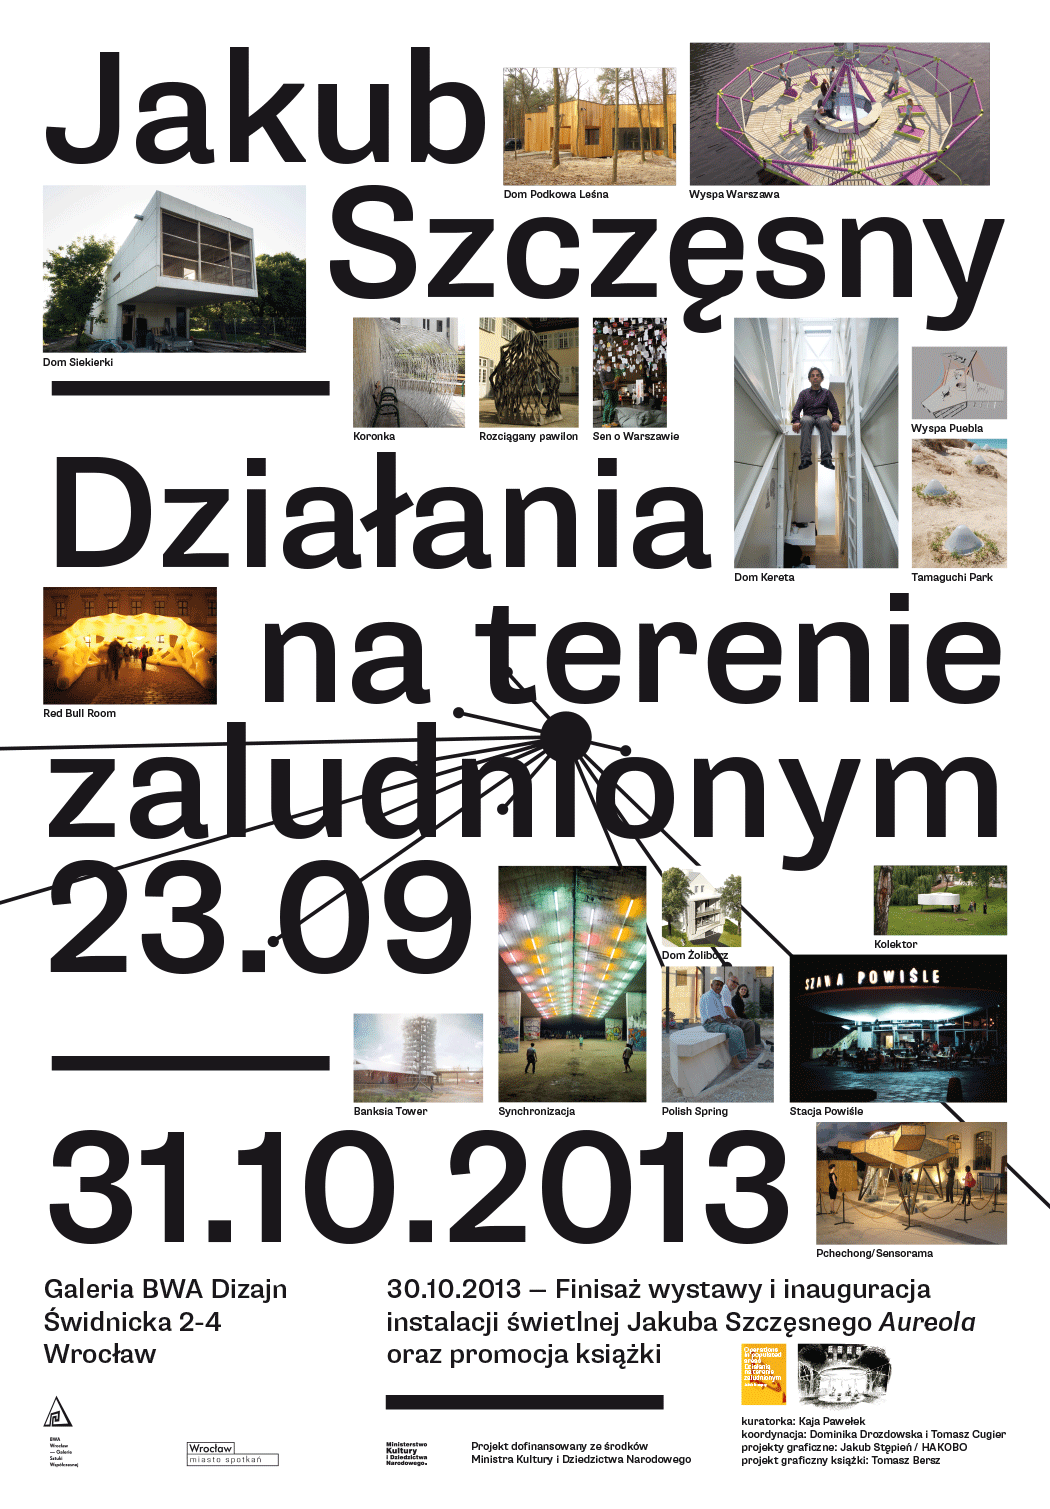 architecture-poster-plakat-jakub-szczesny-jakub-stepien-hakobo